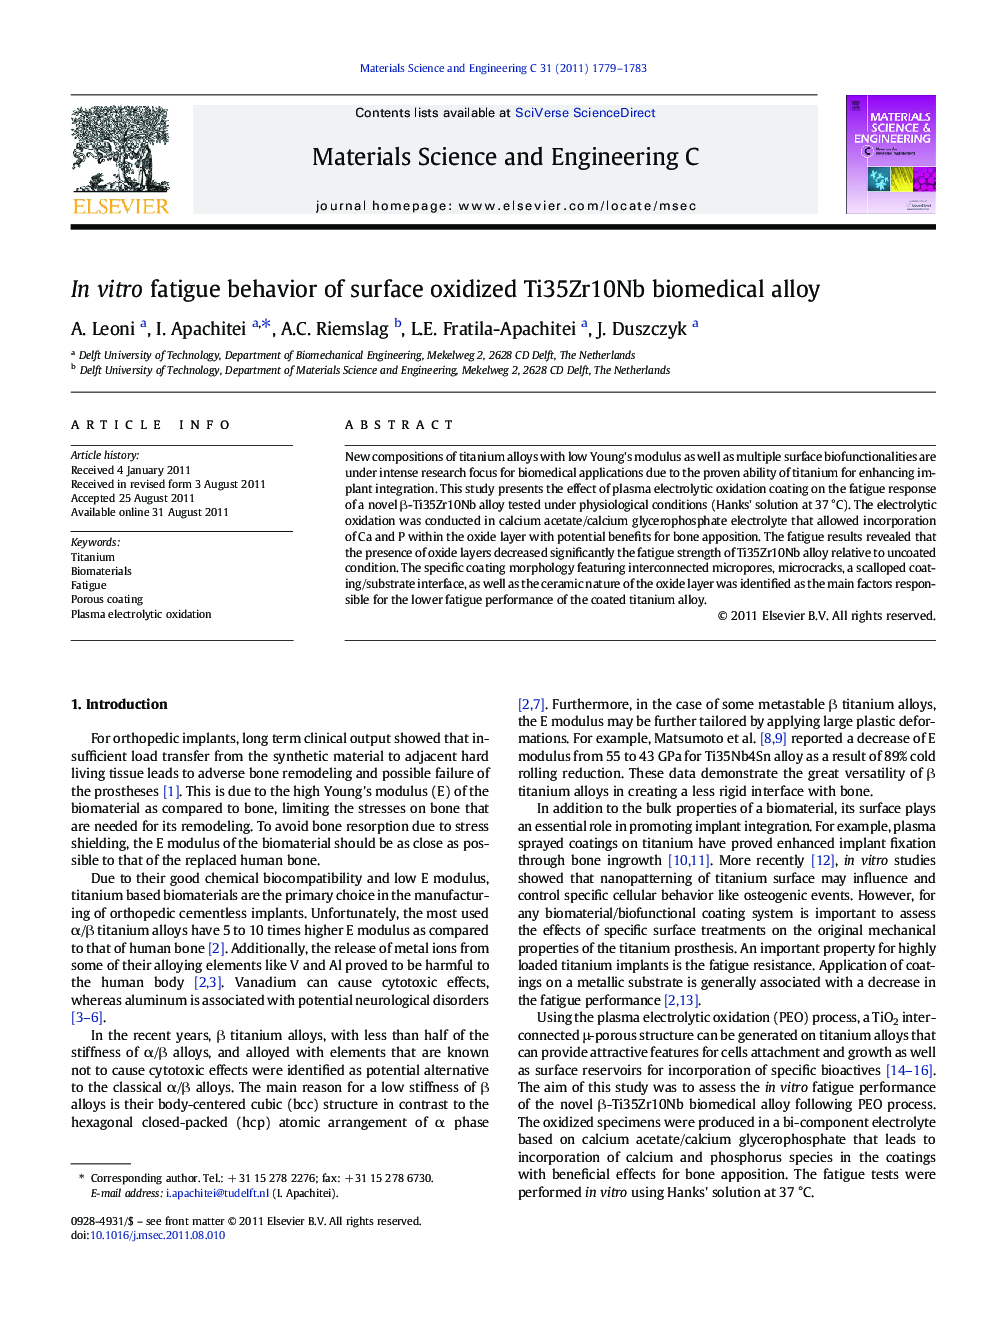 In vitro fatigue behavior of surface oxidized Ti35Zr10Nb biomedical alloy